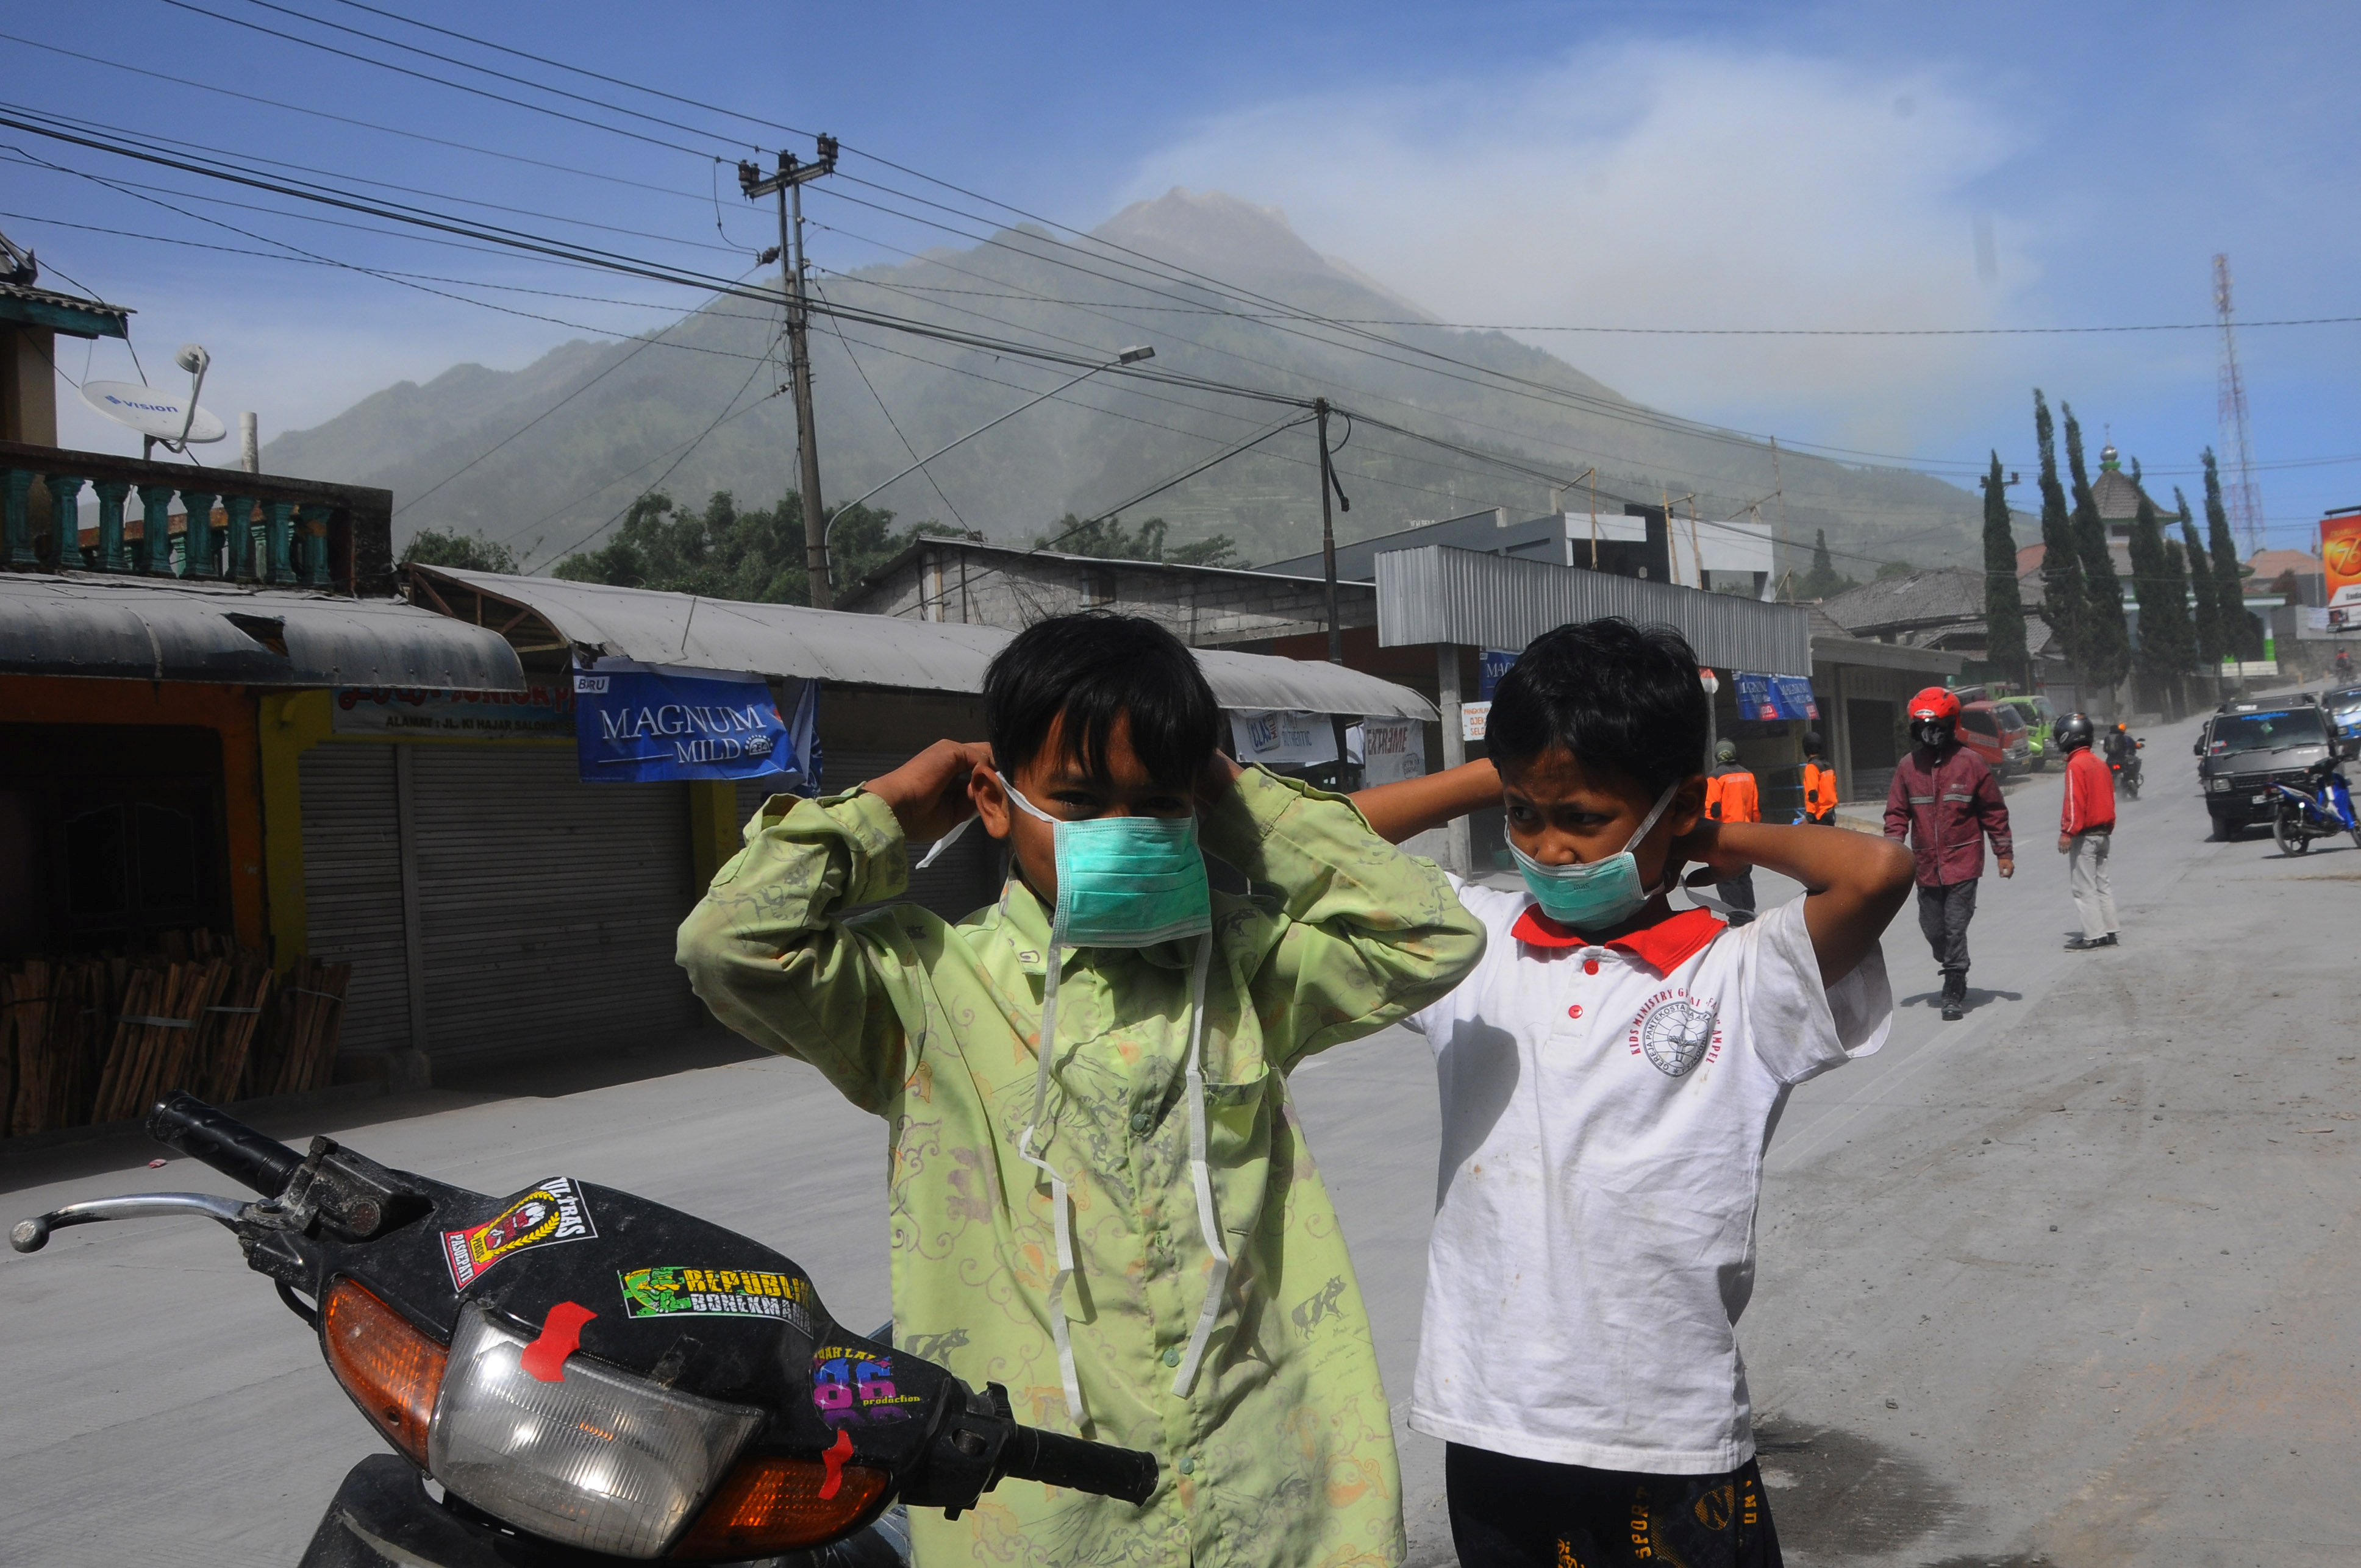 صور انبعاث دخان من بركان فى اندونيسيا (8)